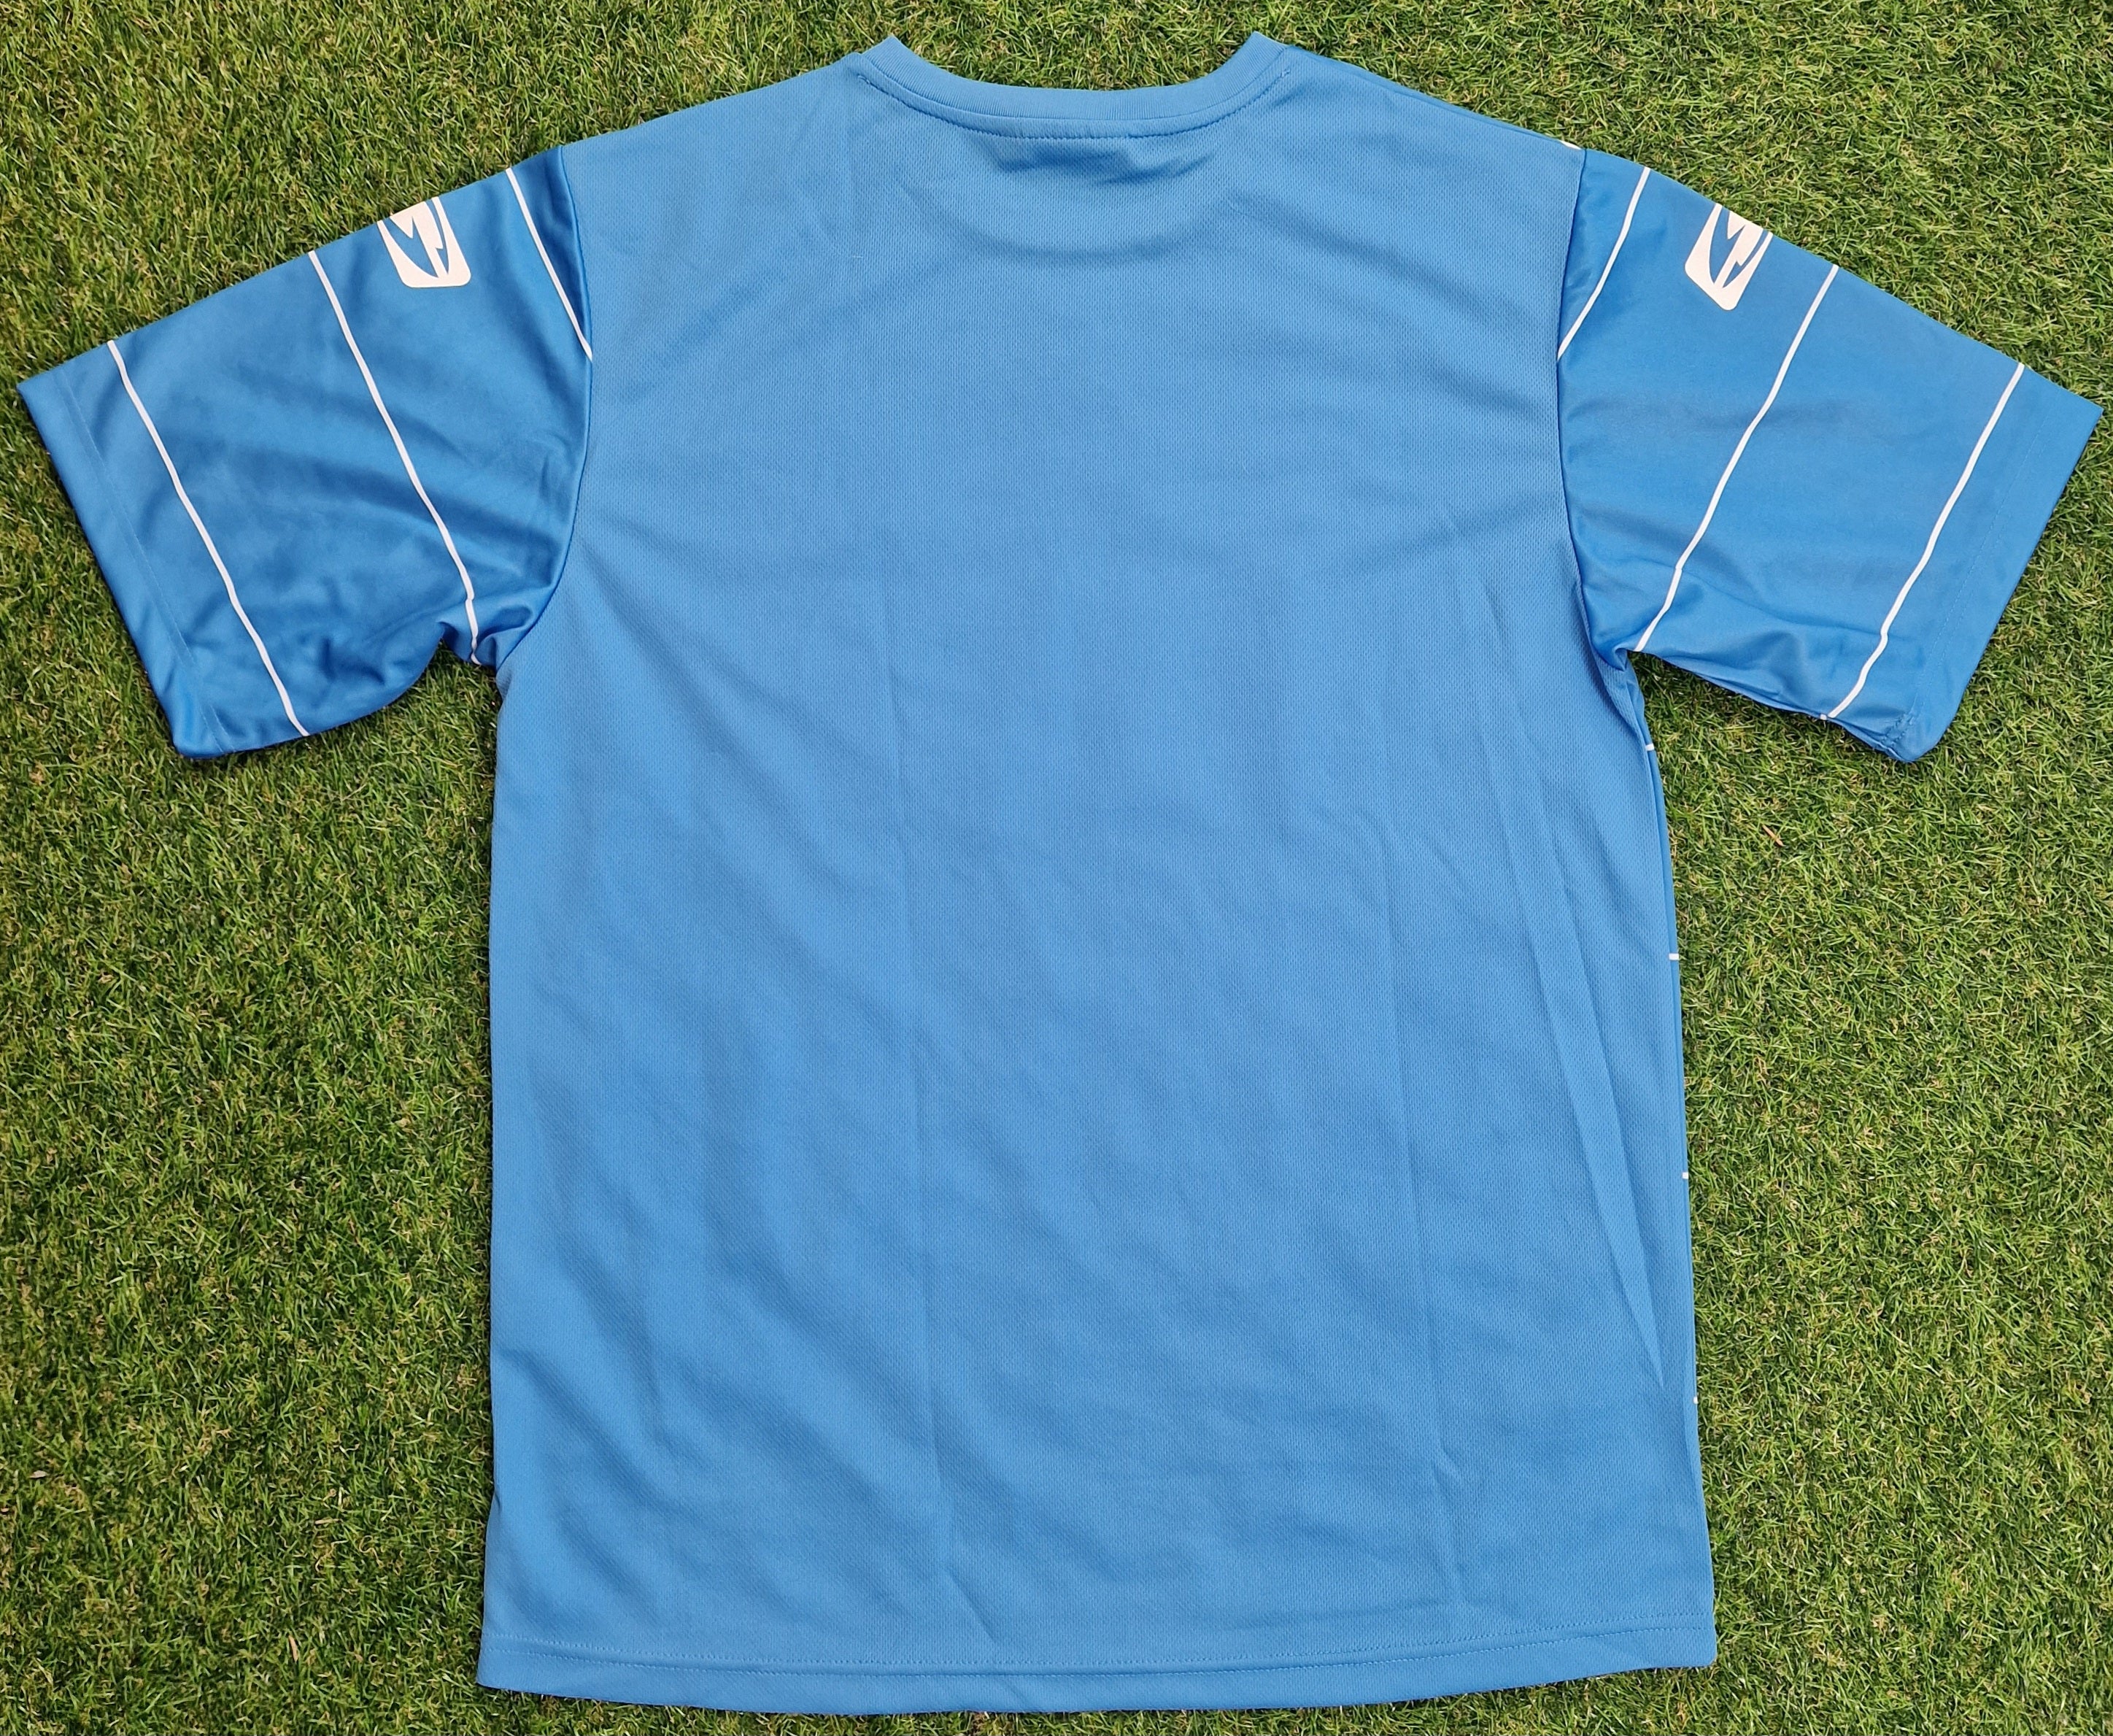 Chemnitzer FC 2011/12 Home Shirt - Size M